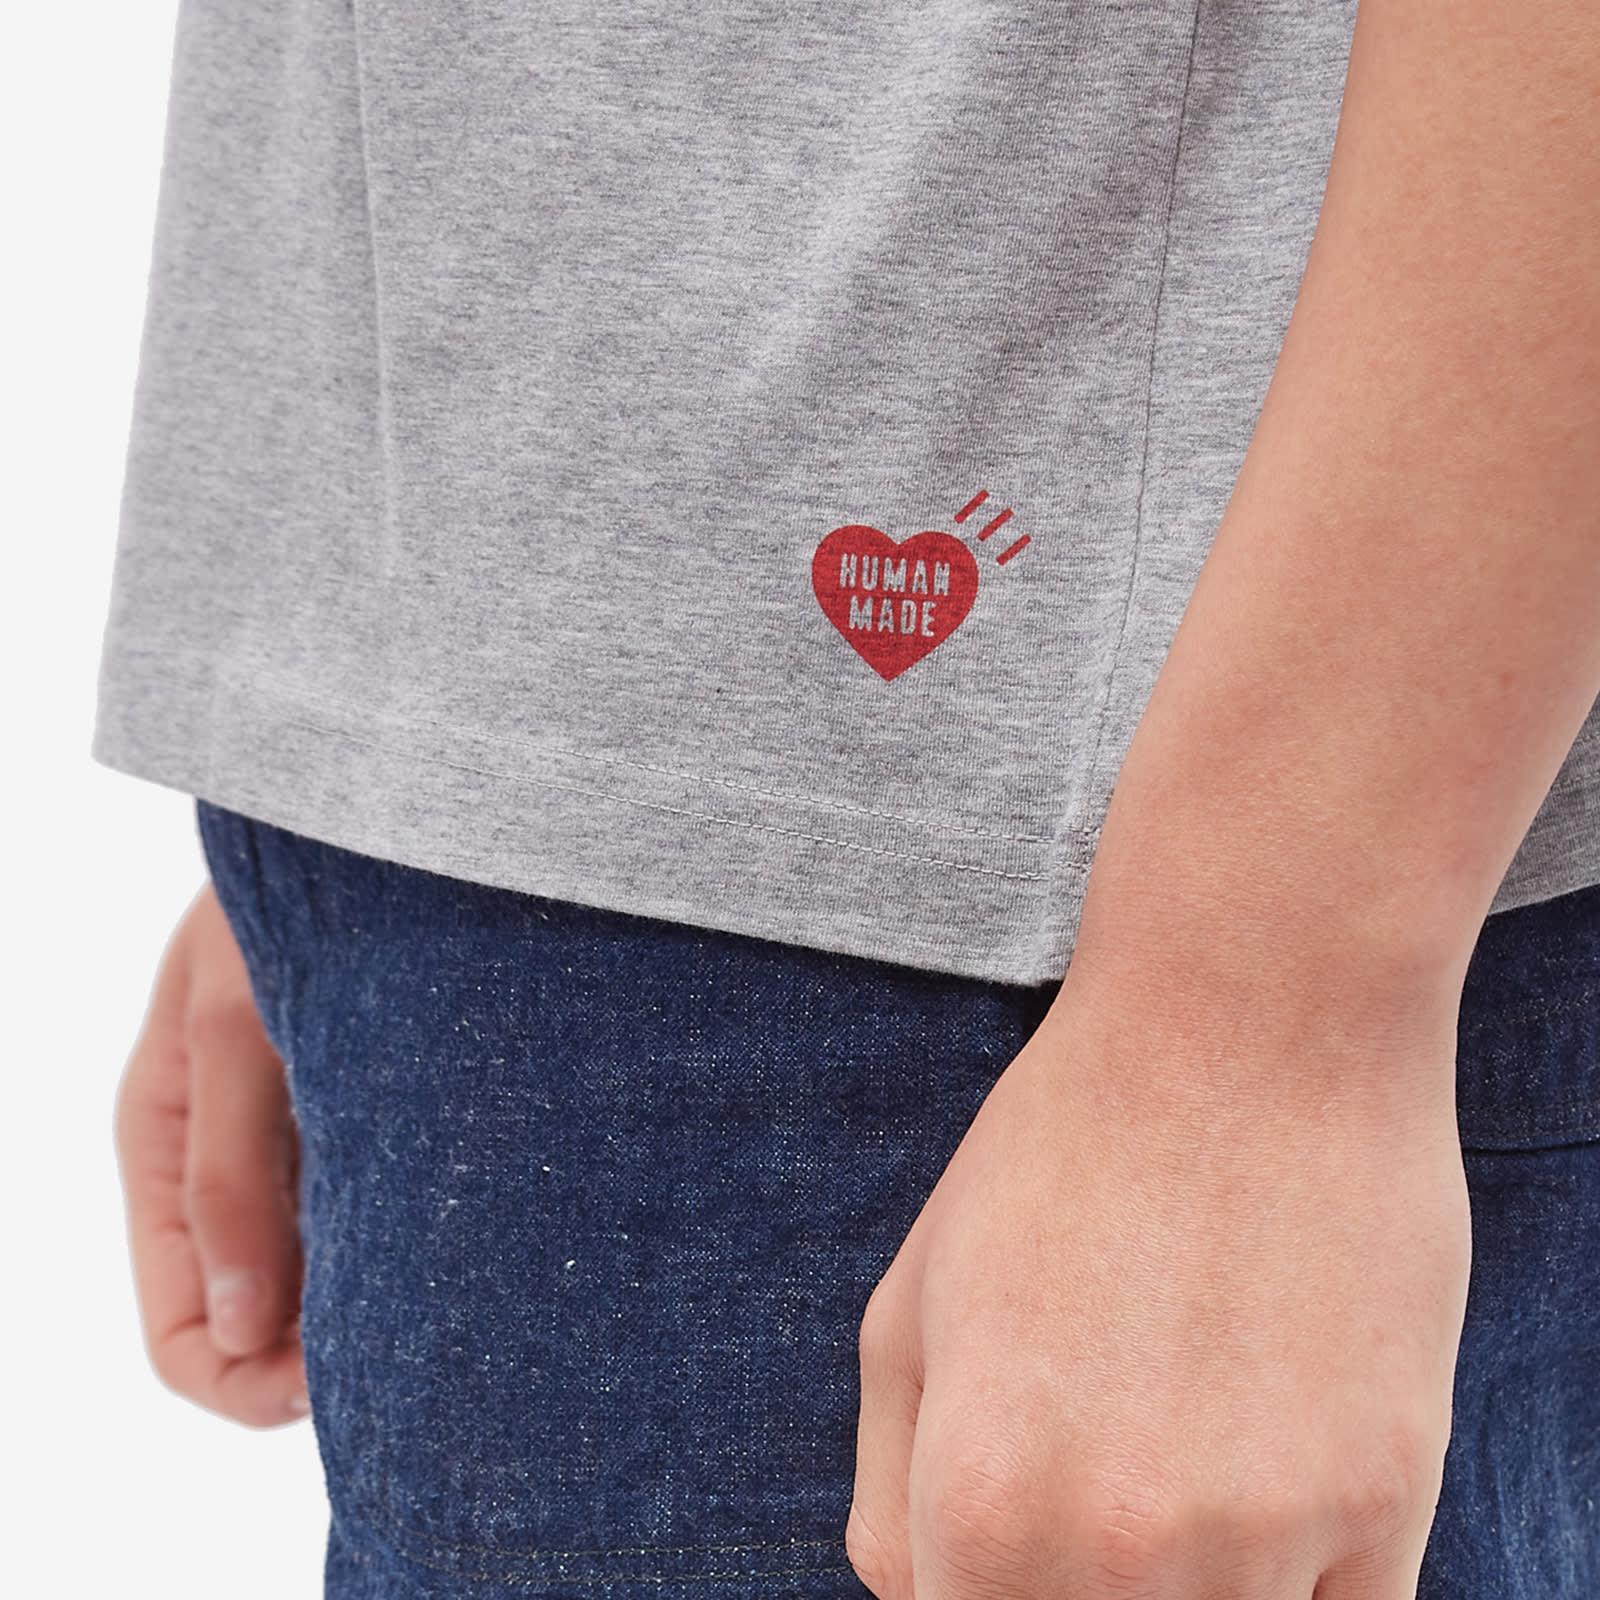 Human Made T Shirt - Nigo New Collection Shirts